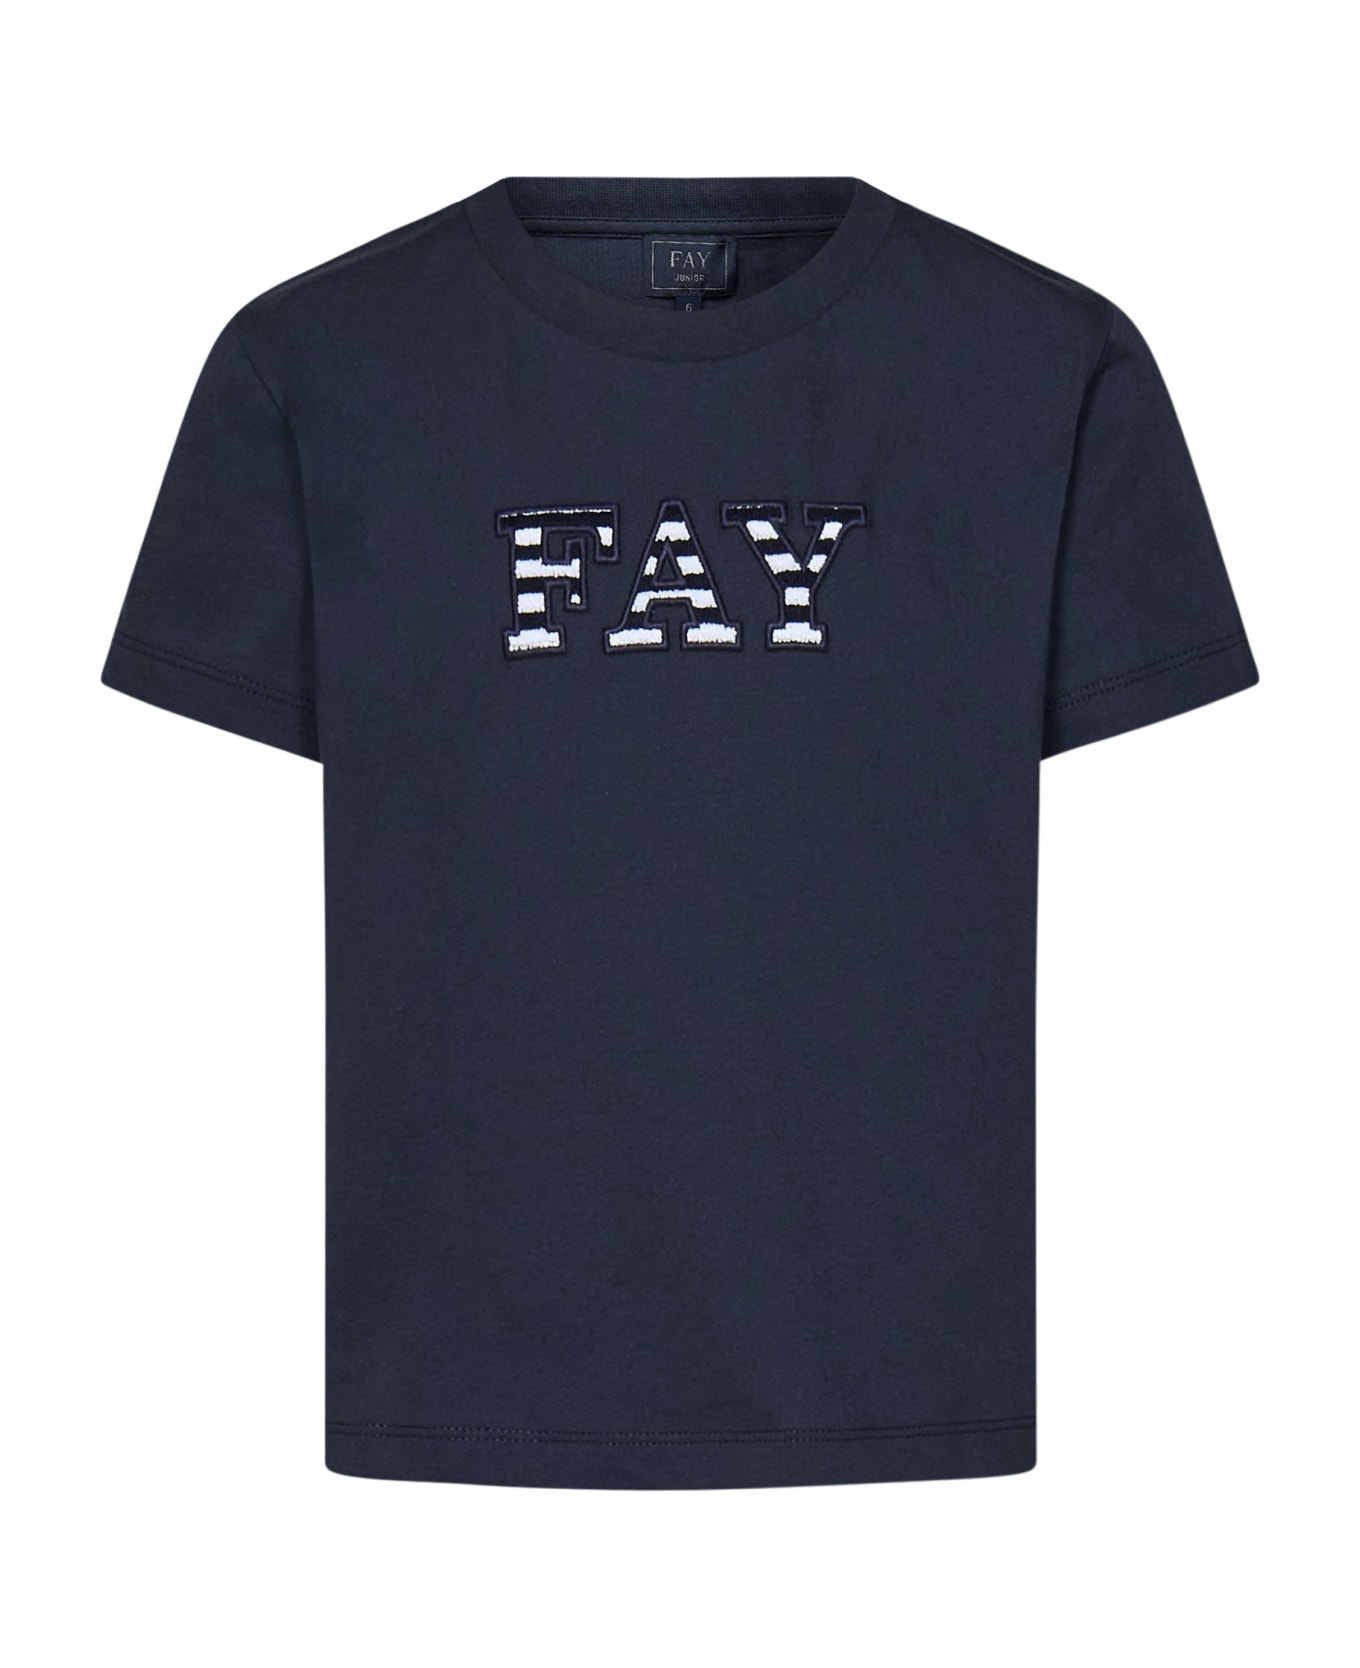 Fay Kids T-shirt - Blue